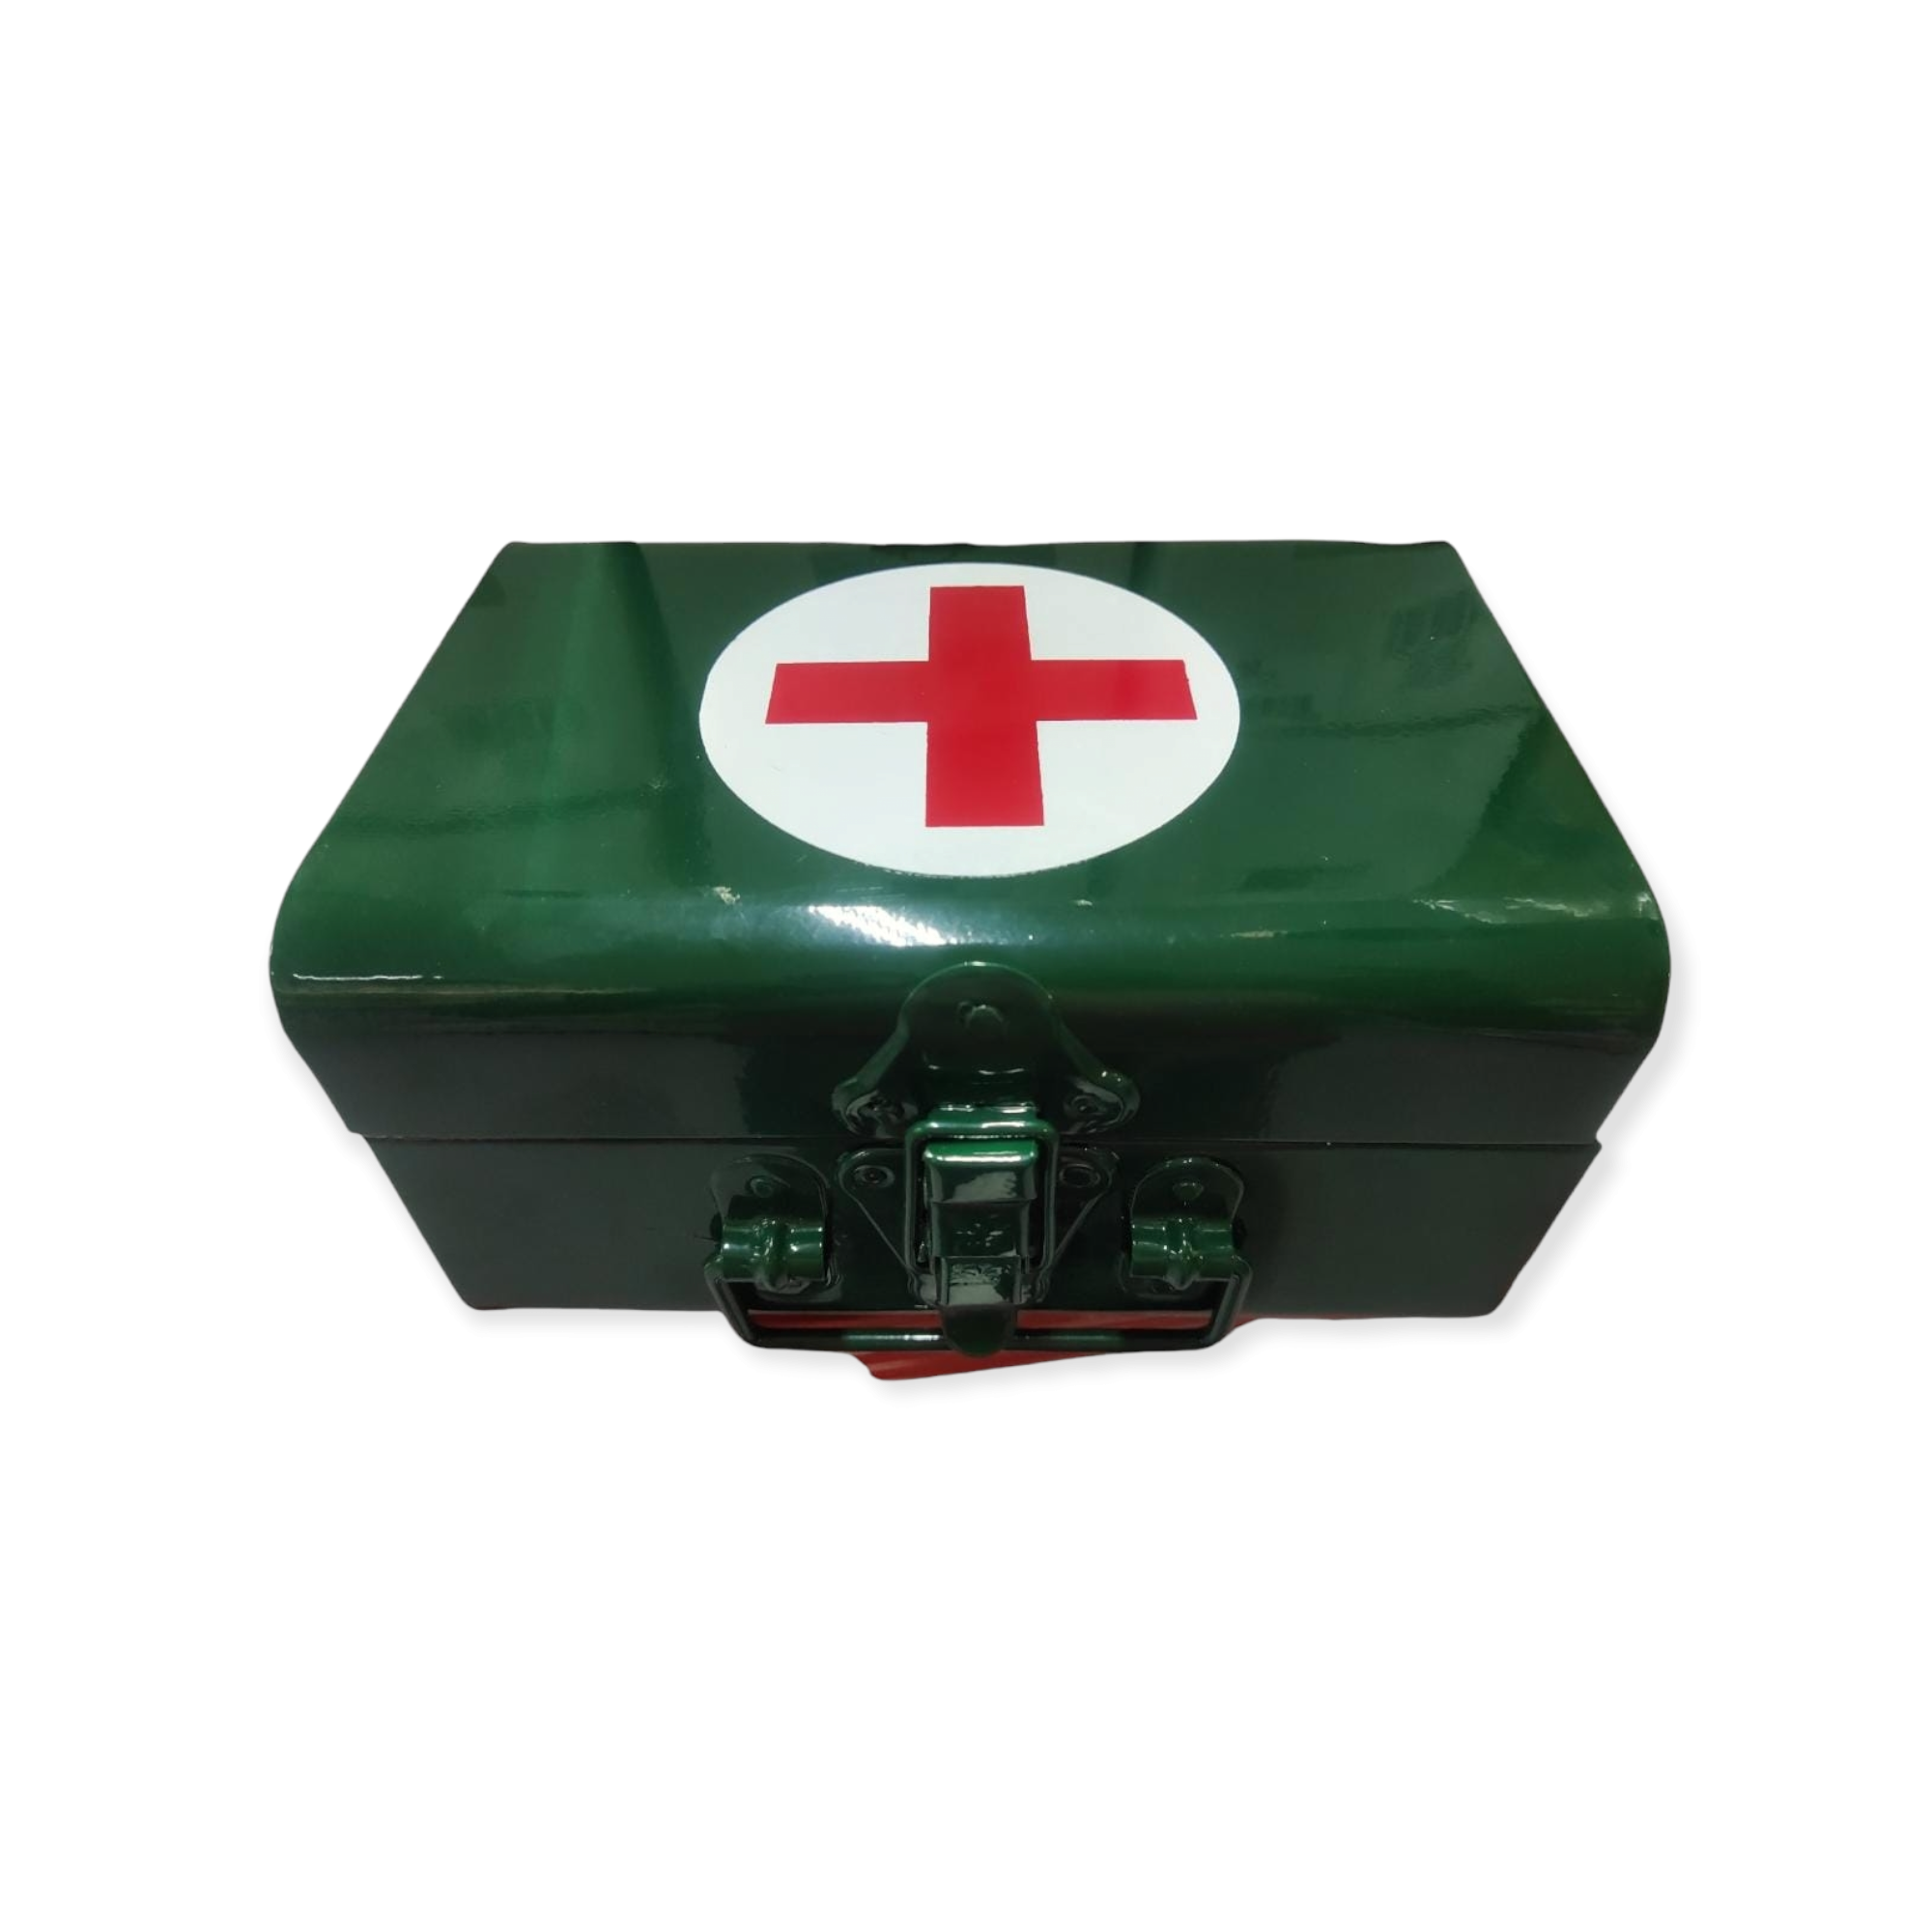 Vintage First Aid Box Galvanised - Rectangular